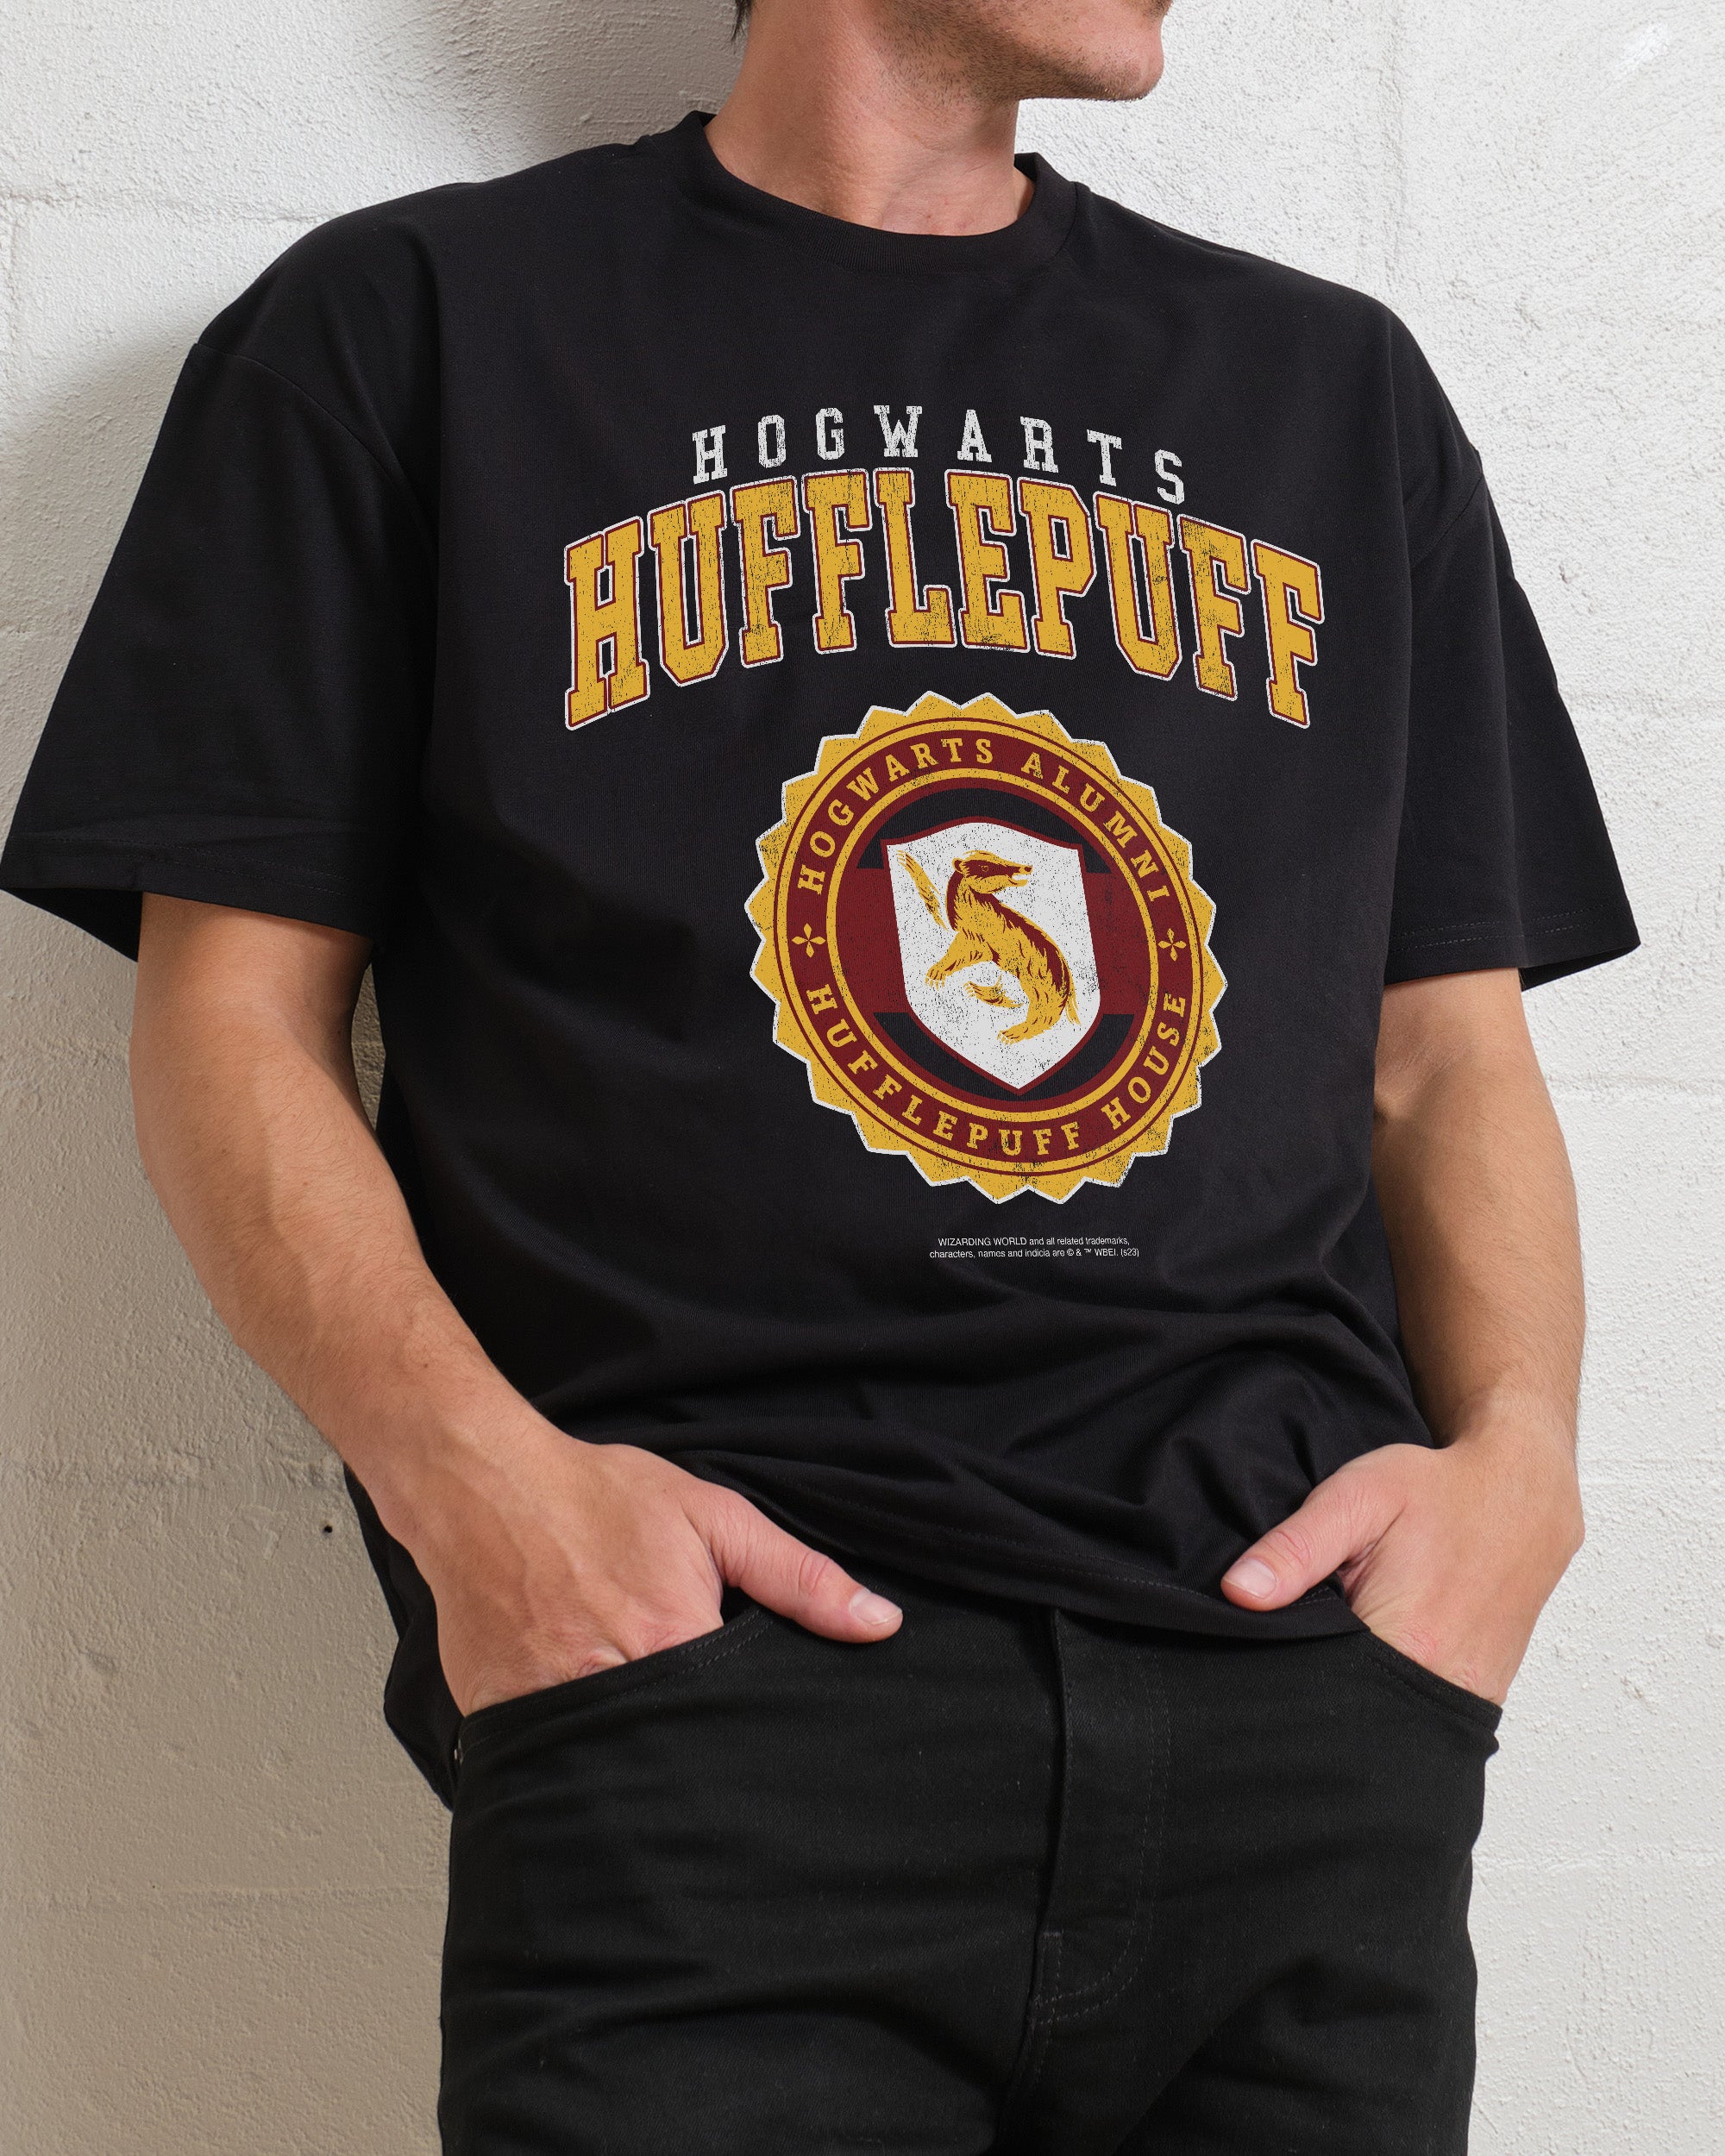 Hufflepuff College T-Shirt